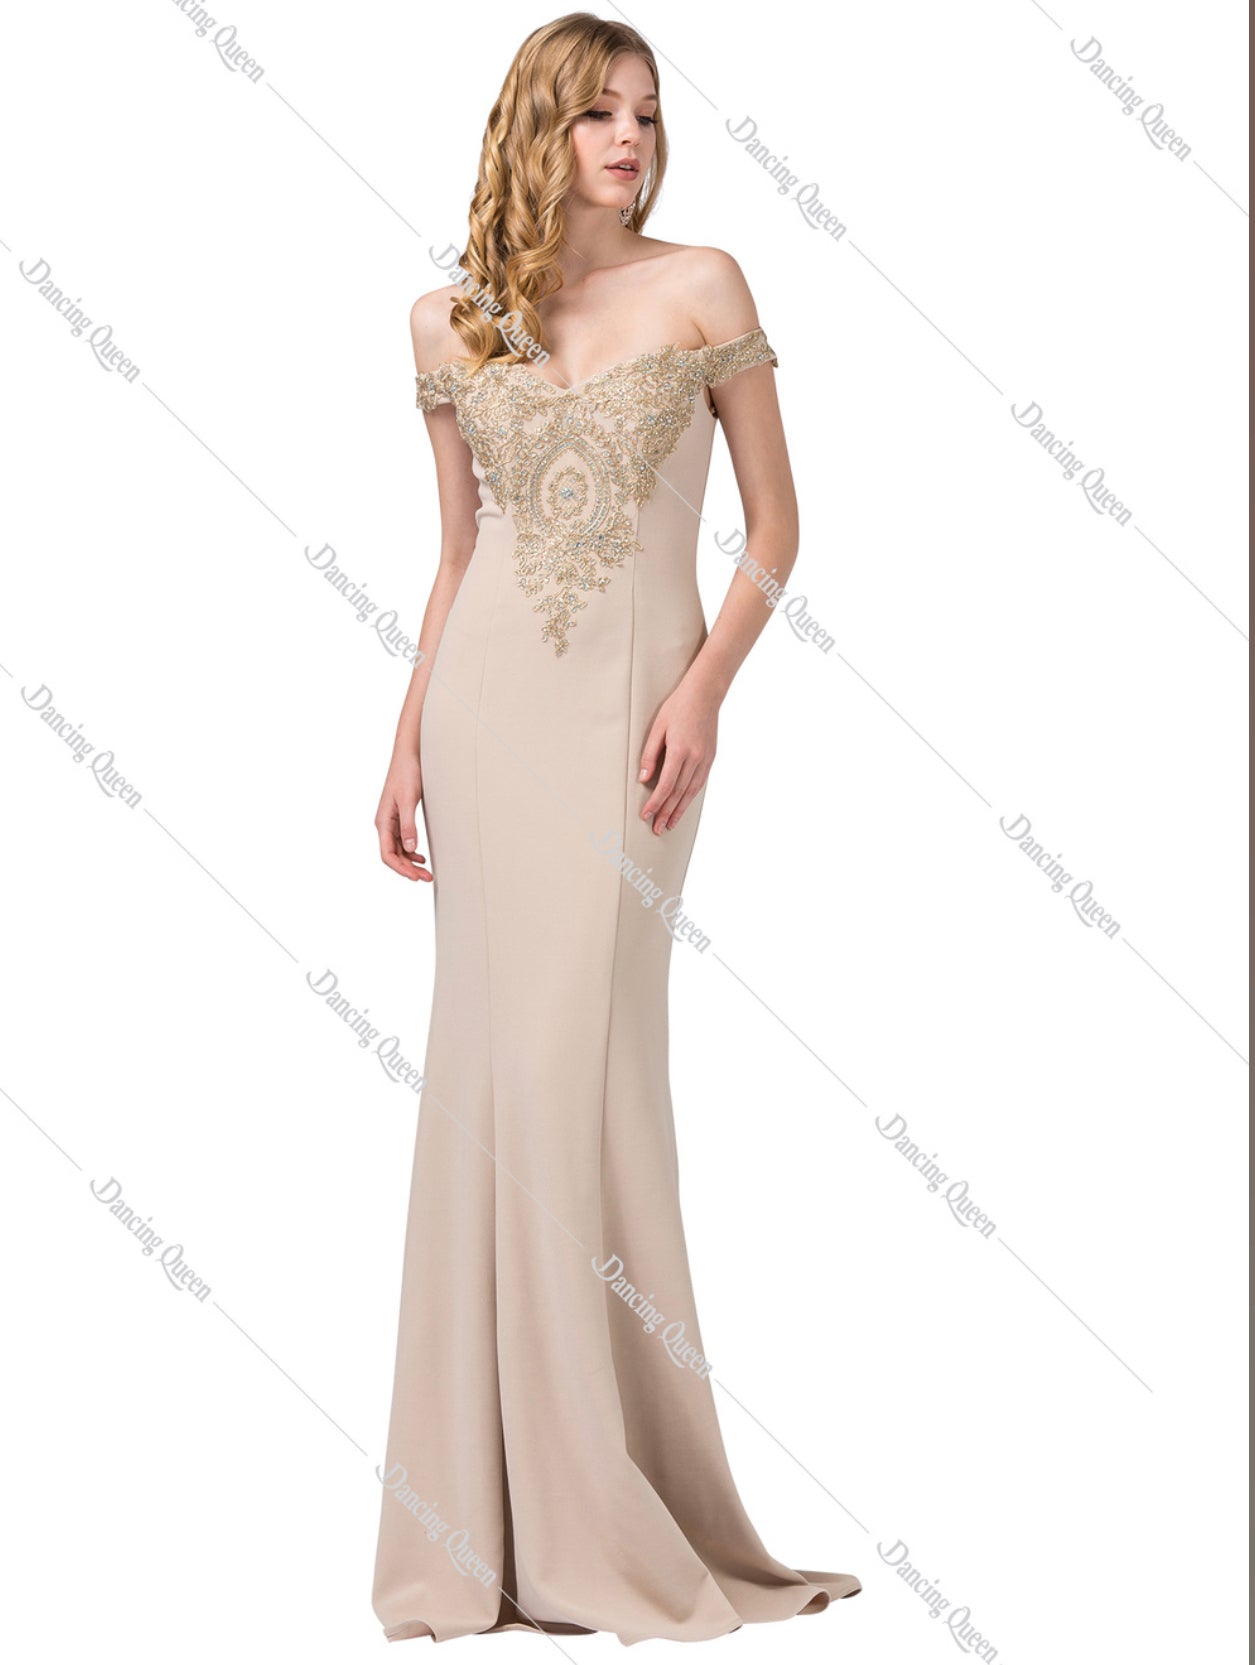 Formal Dresses | Elegant Women's Formal Gowns - Ever-Pretty US